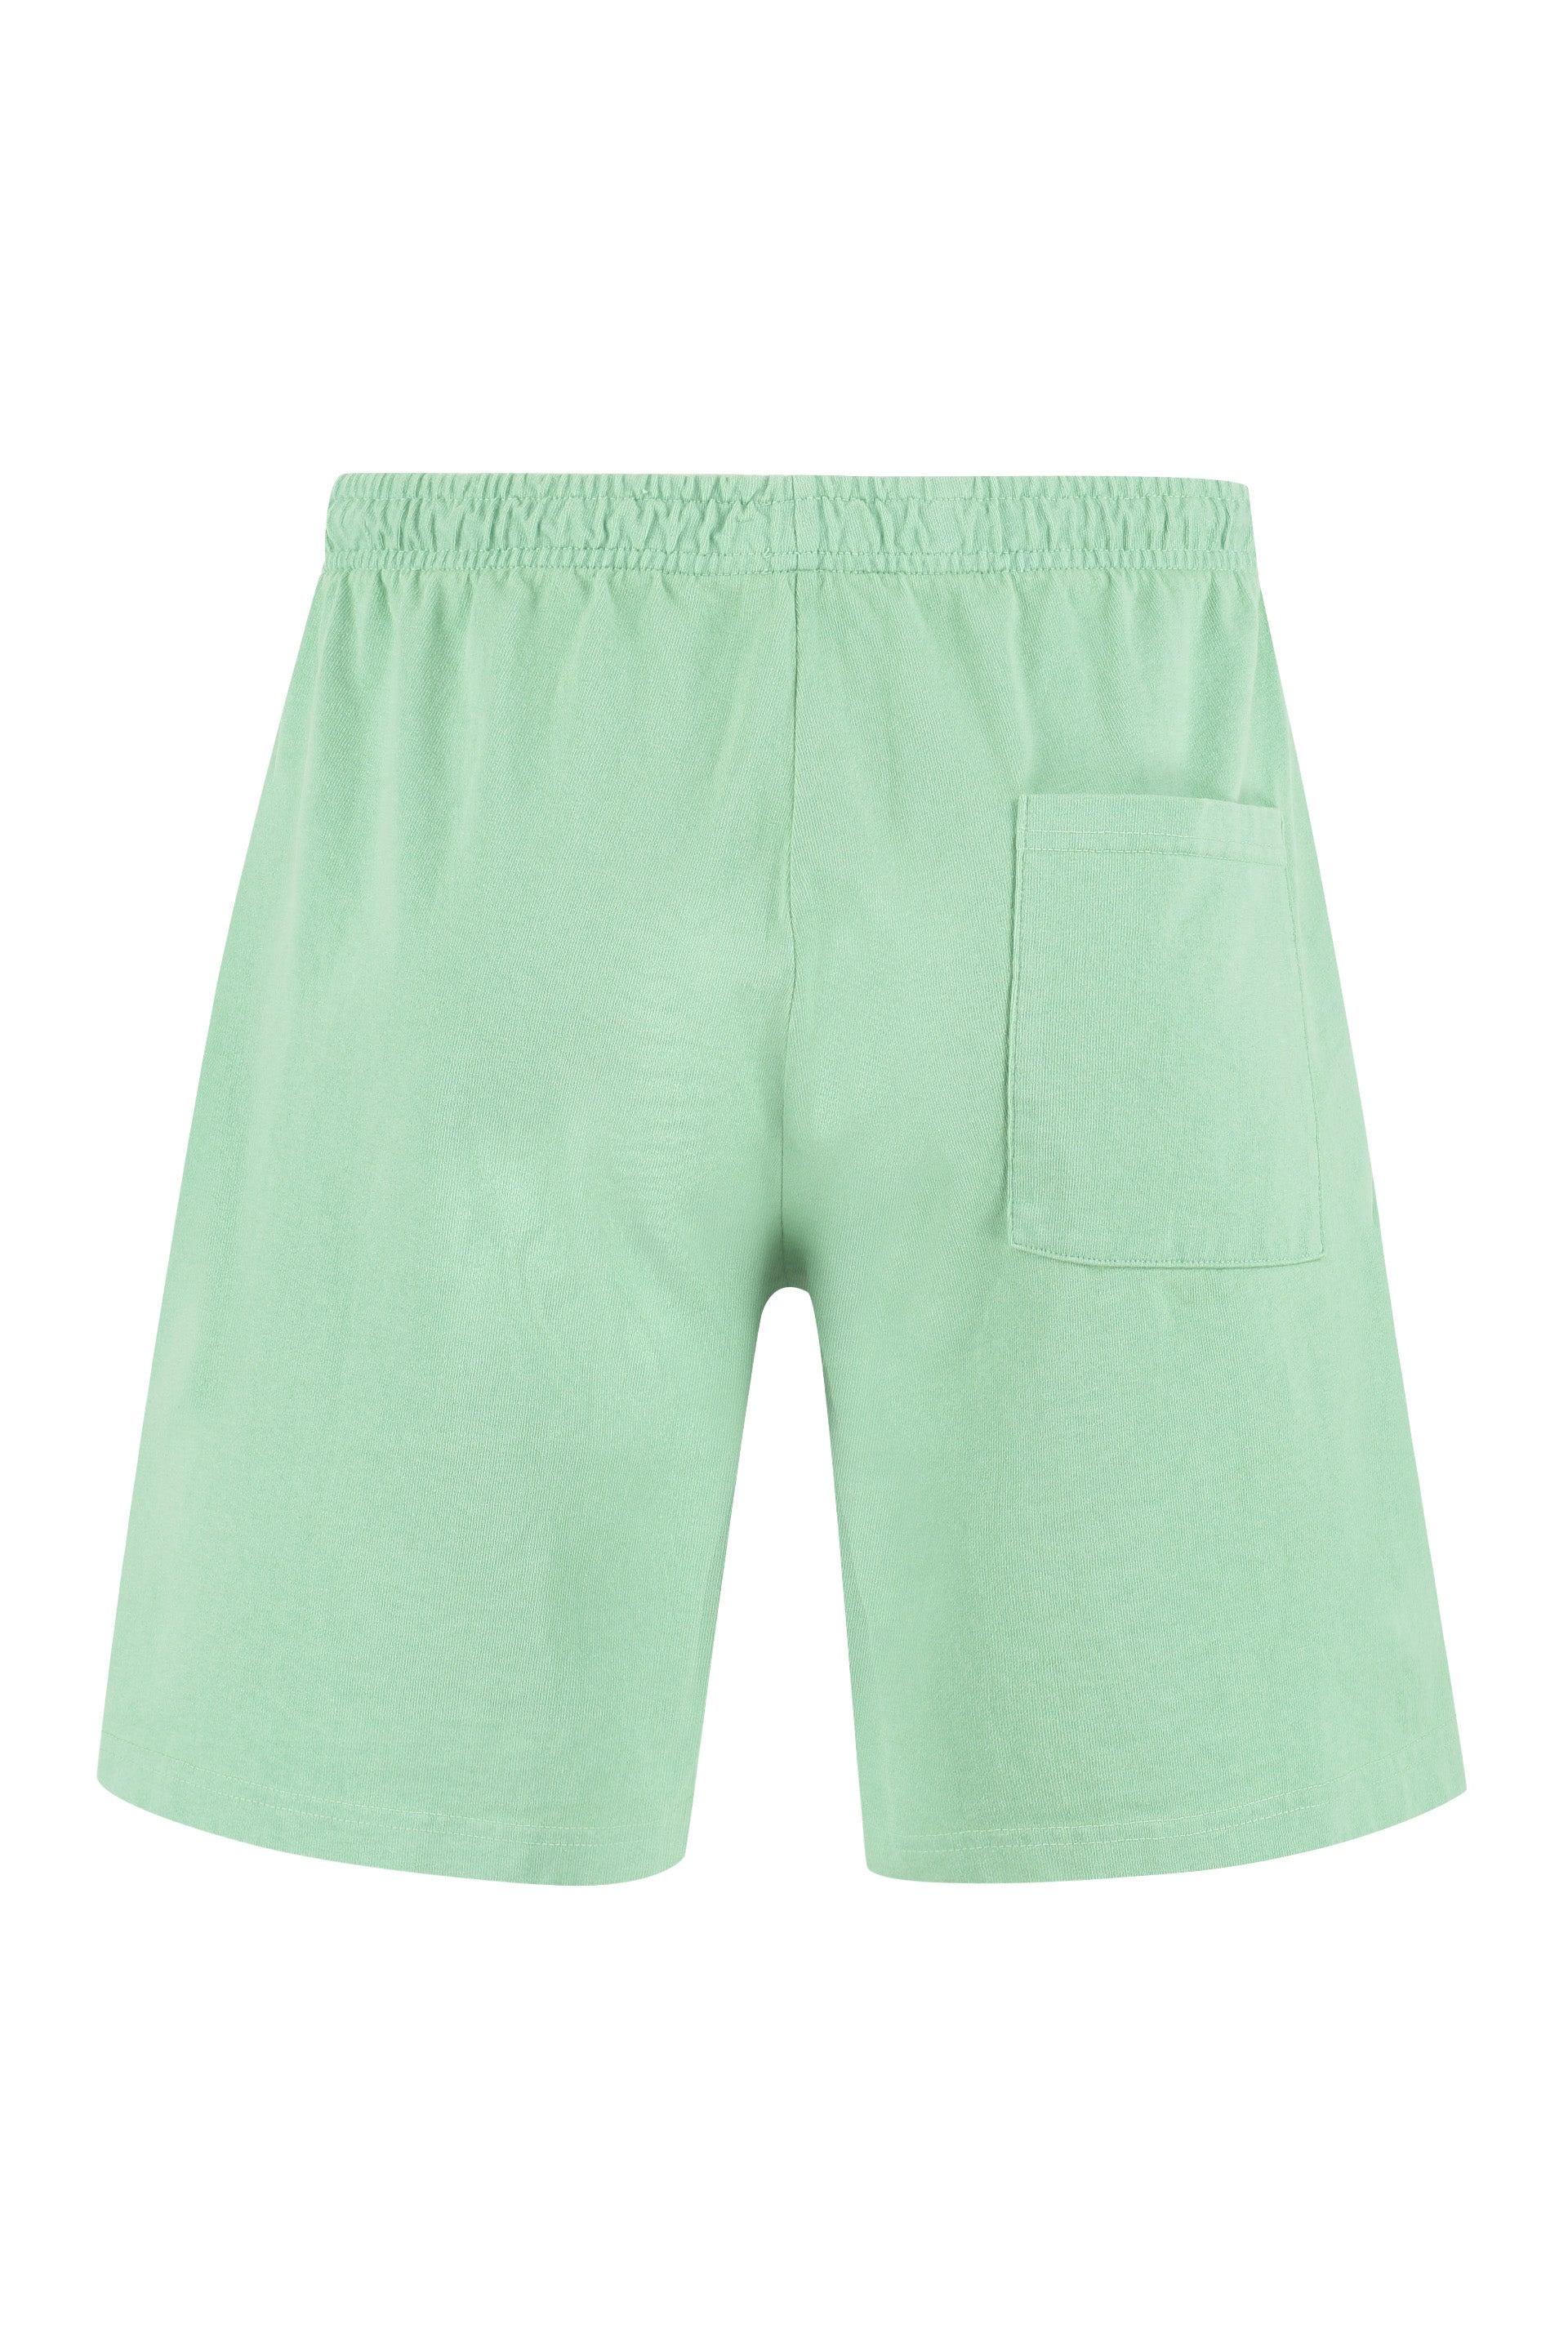 Green Womens Shorts Sporty & Rich Shorts - Save 41% Sporty & Rich Cotton Sporty Rich Monaco Gym Shorts in Sage 